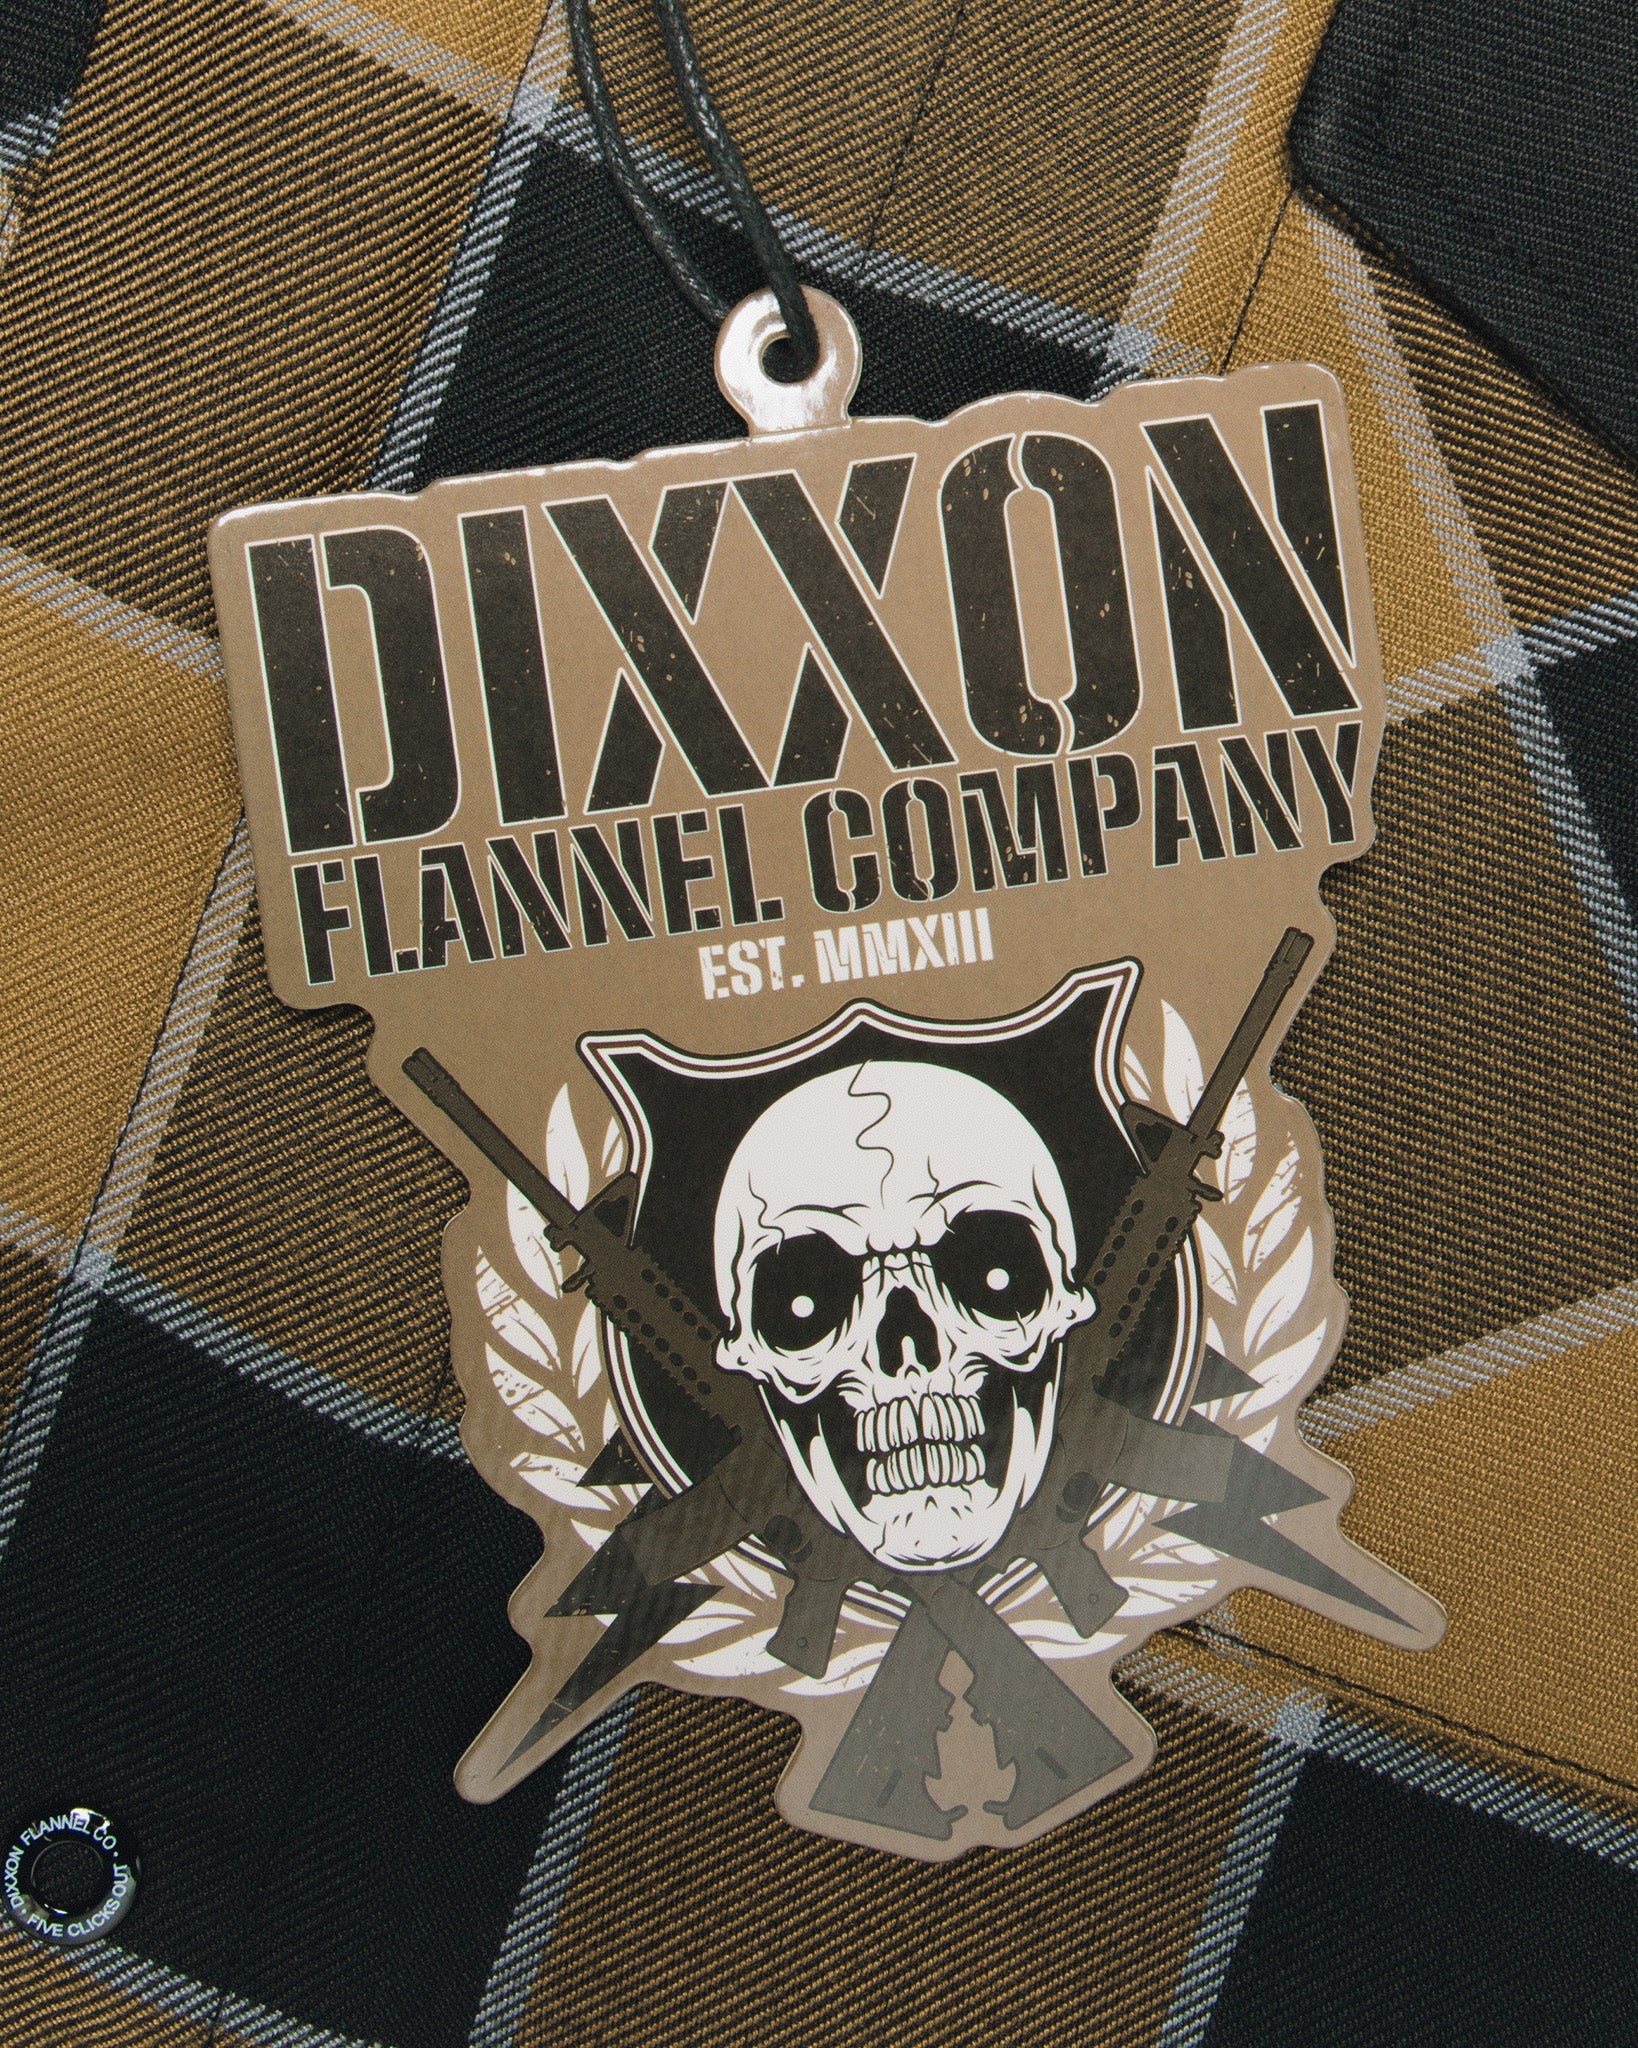 5 Clicks Out Flannel - Dixxon Flannel Co. 